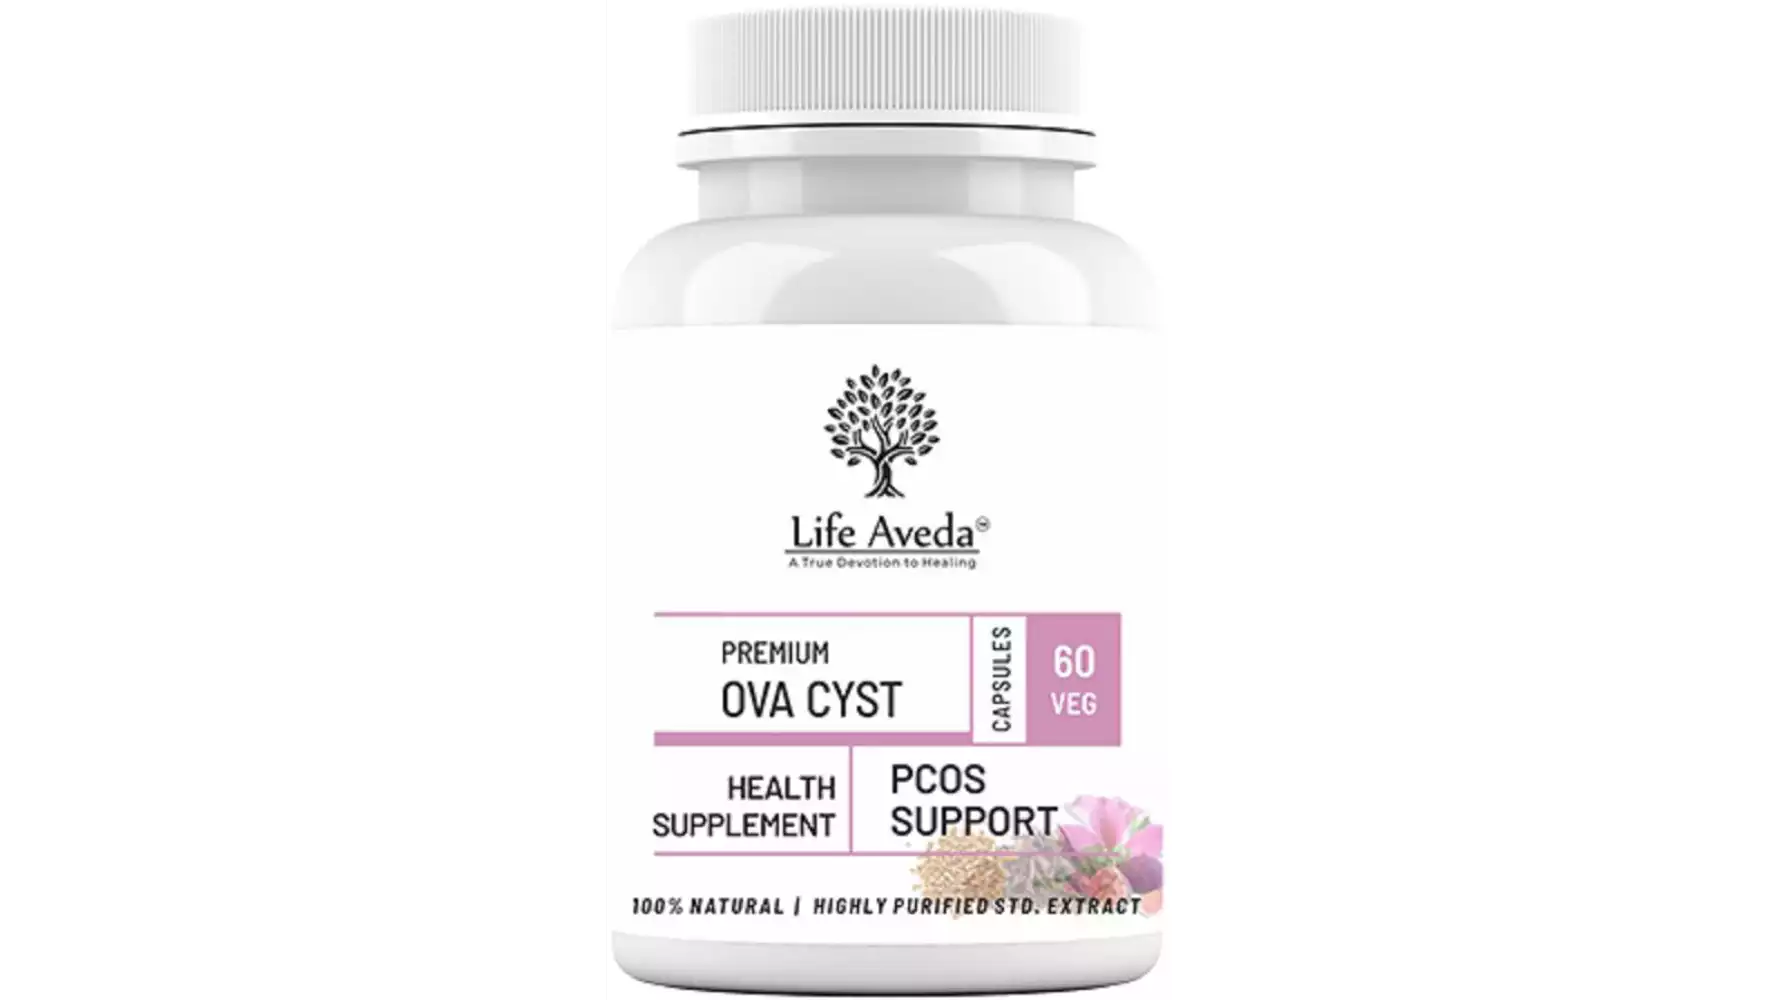 Life Aveda Premium OVA Cyst Health Supplement (60caps)